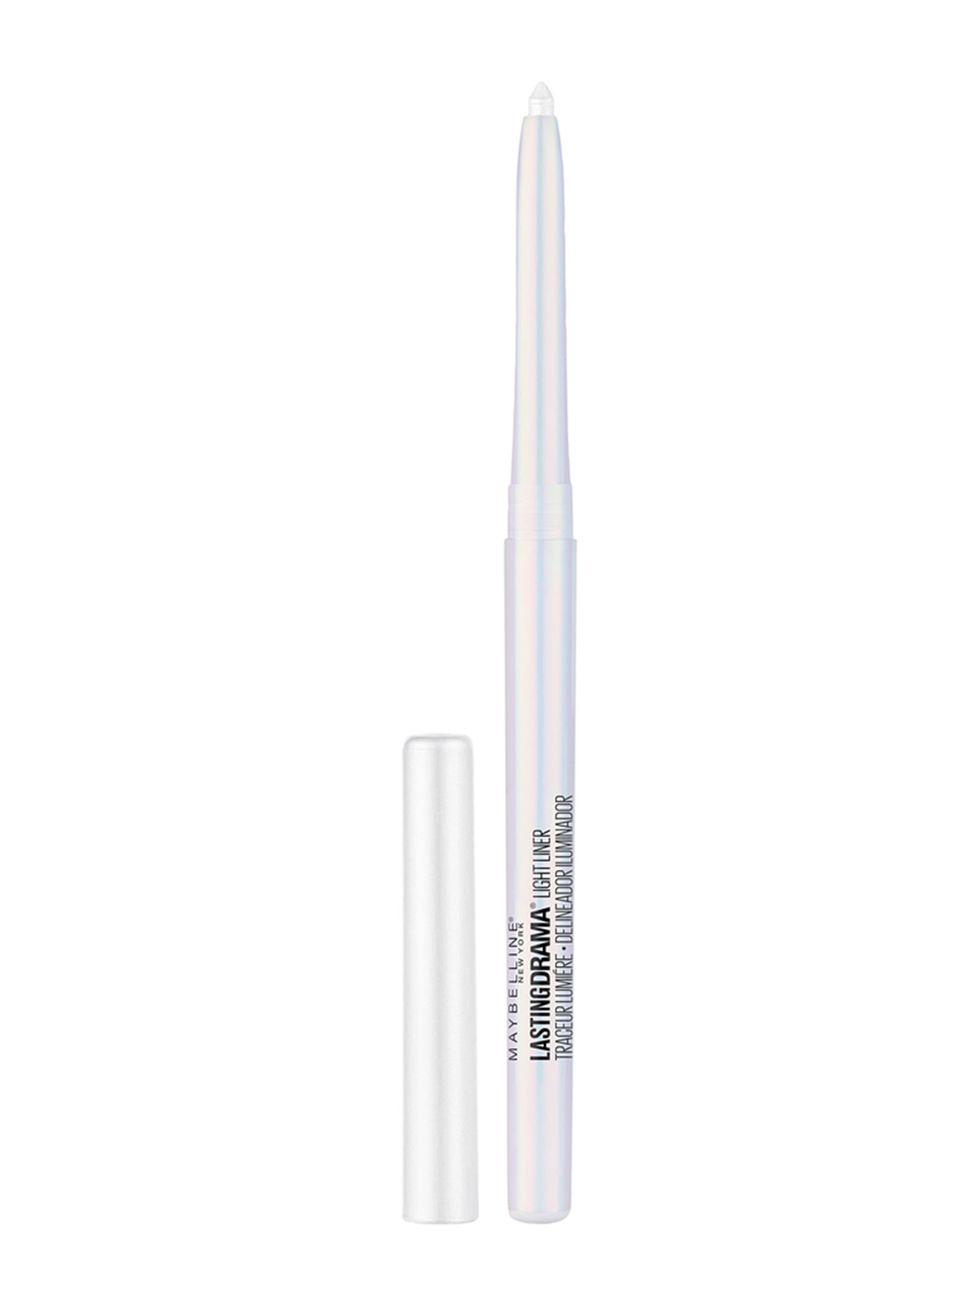 Maybelline New York Lasting Drama Light Eyeliner Pencil